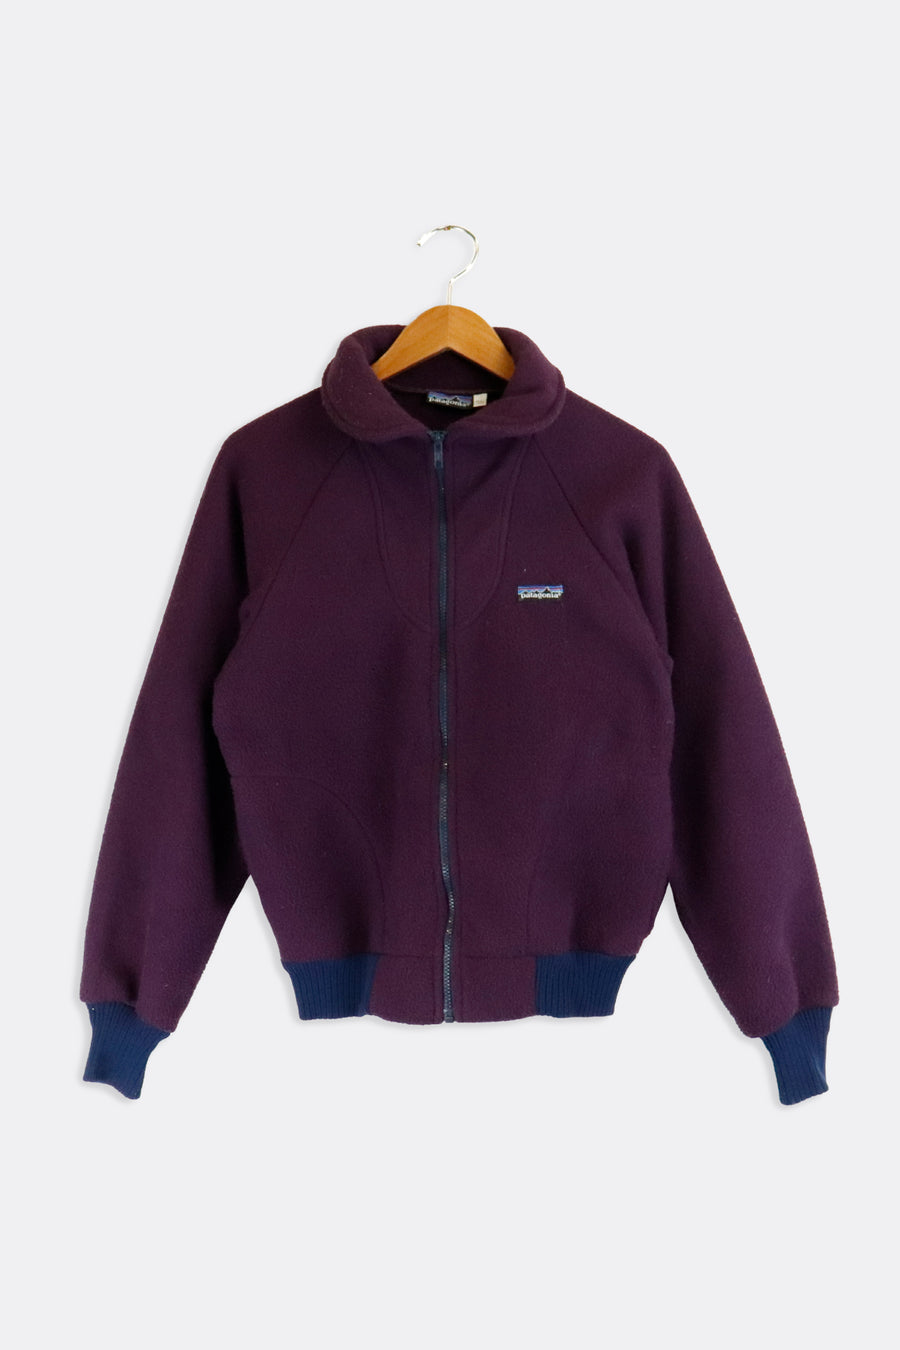 Vintage Patagonia Zip Up With Pockets Fleece Sweatshirt